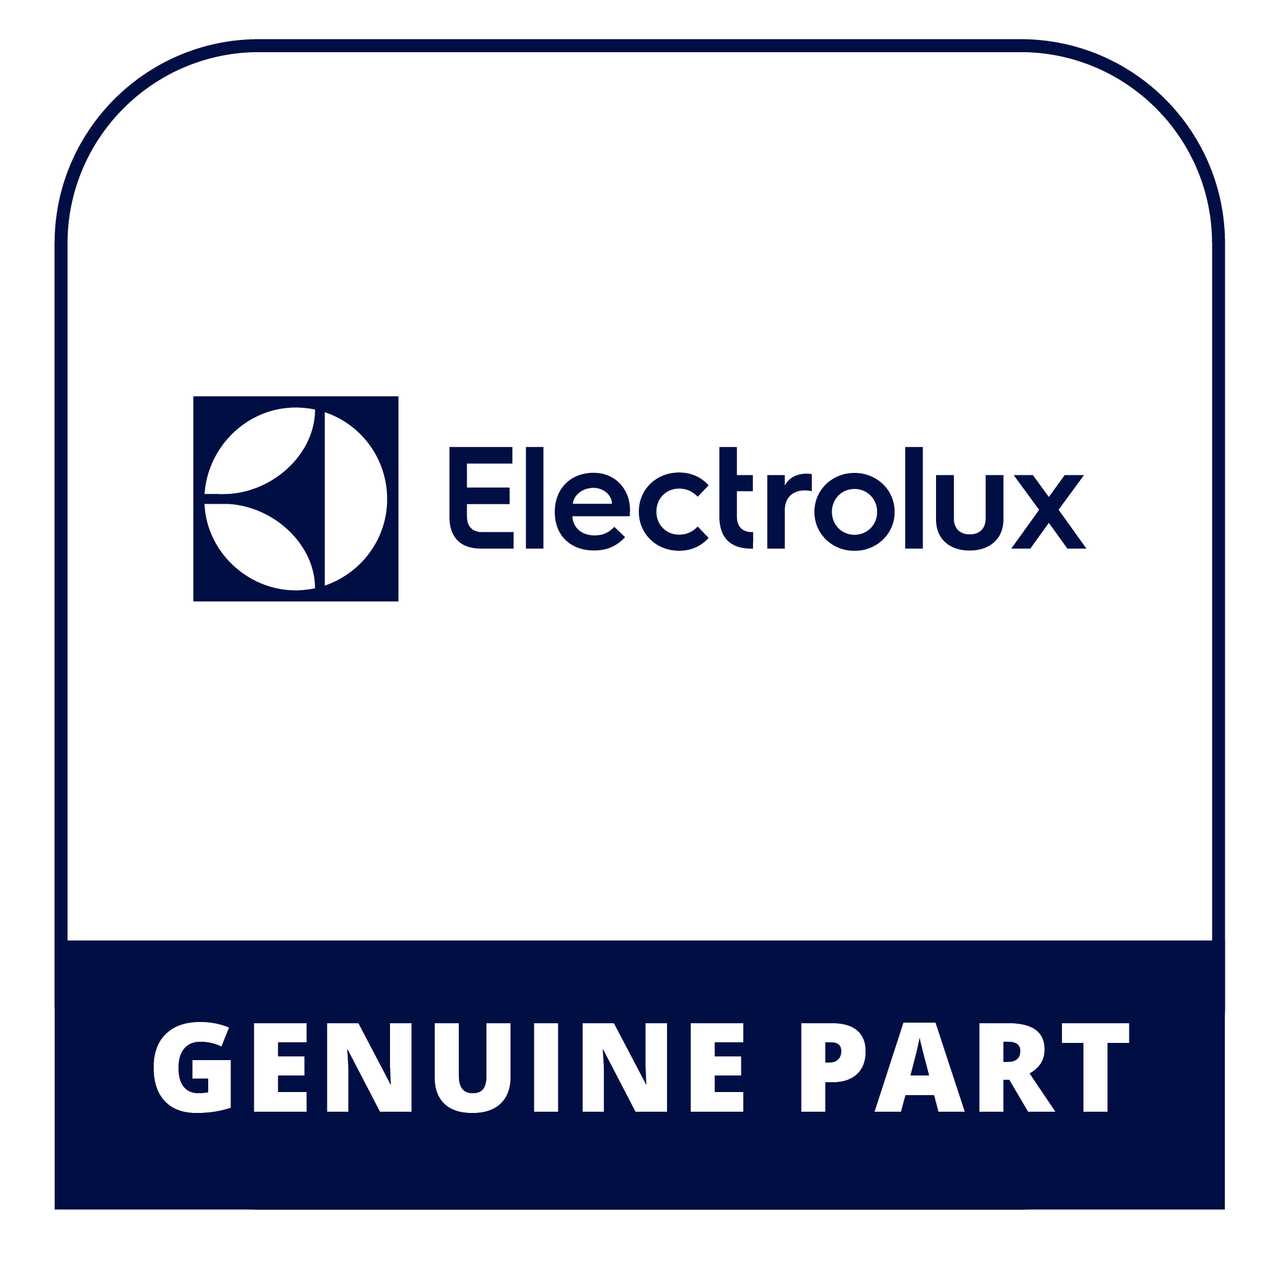 Frigidaire - Electrolux 318405203 Trim - Genuine Electrolux Part